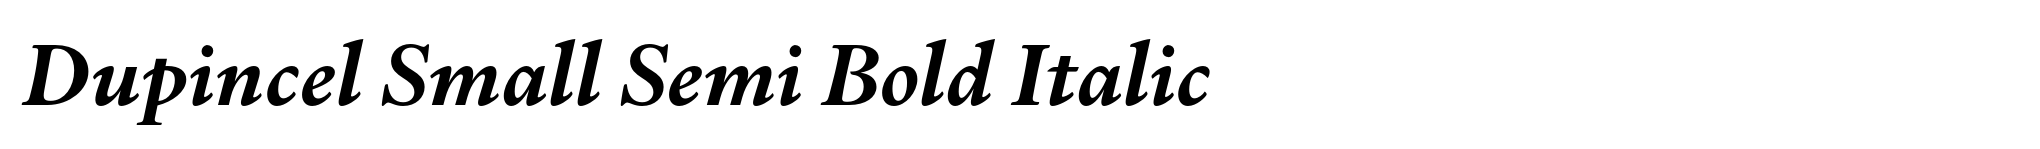 Dupincel Small Semi Bold Italic image